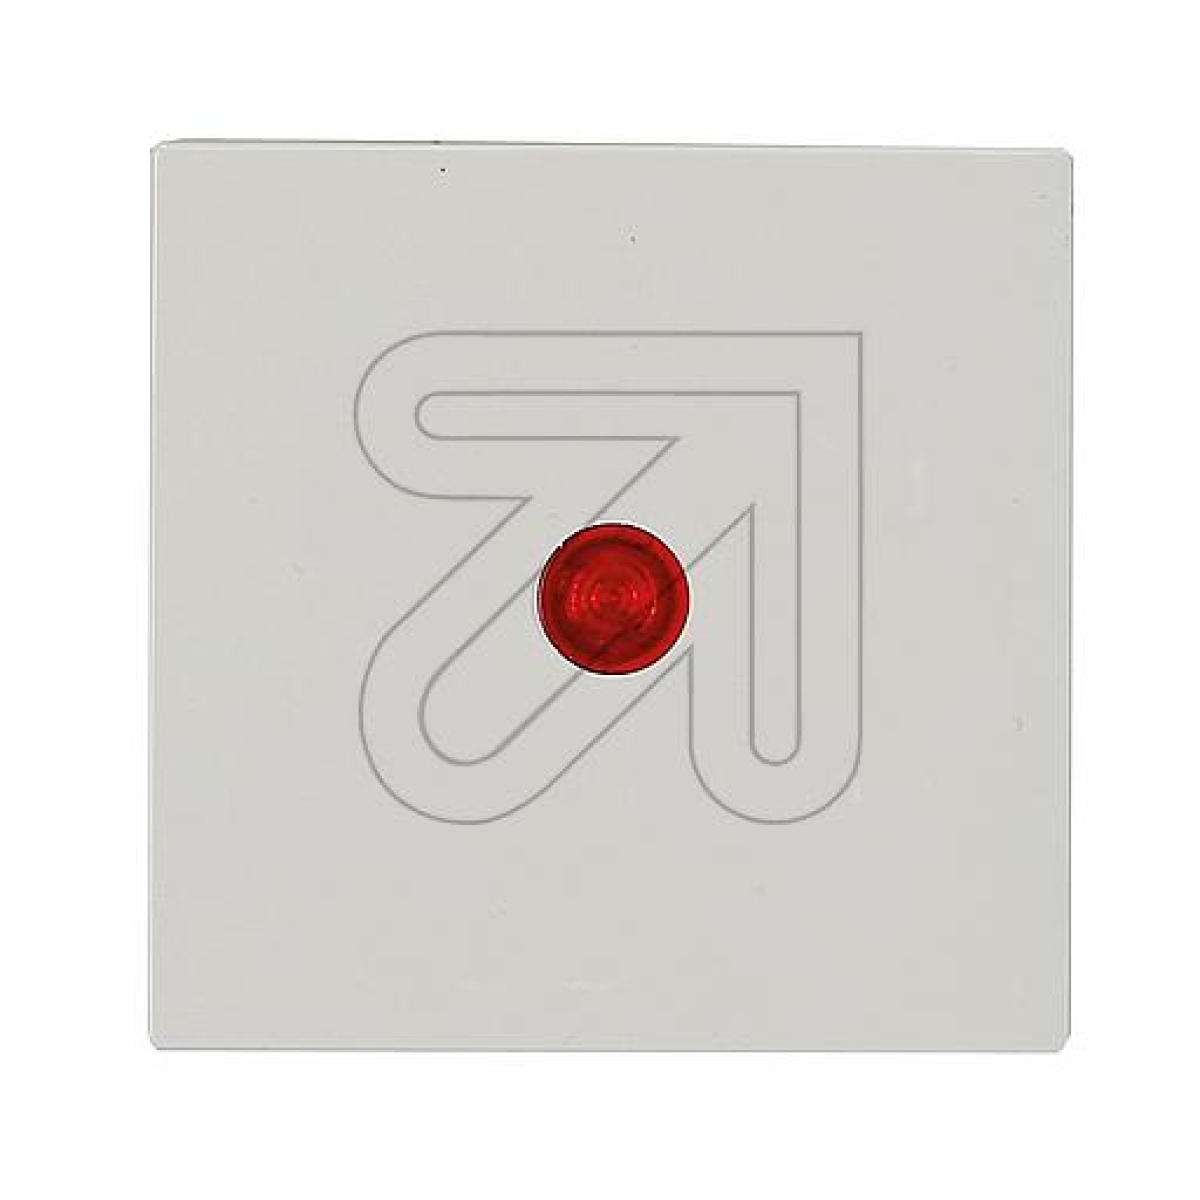 KleinKG55 rocker control pure white with symbol stripe KG2520/04ZSArticle-No: 088575